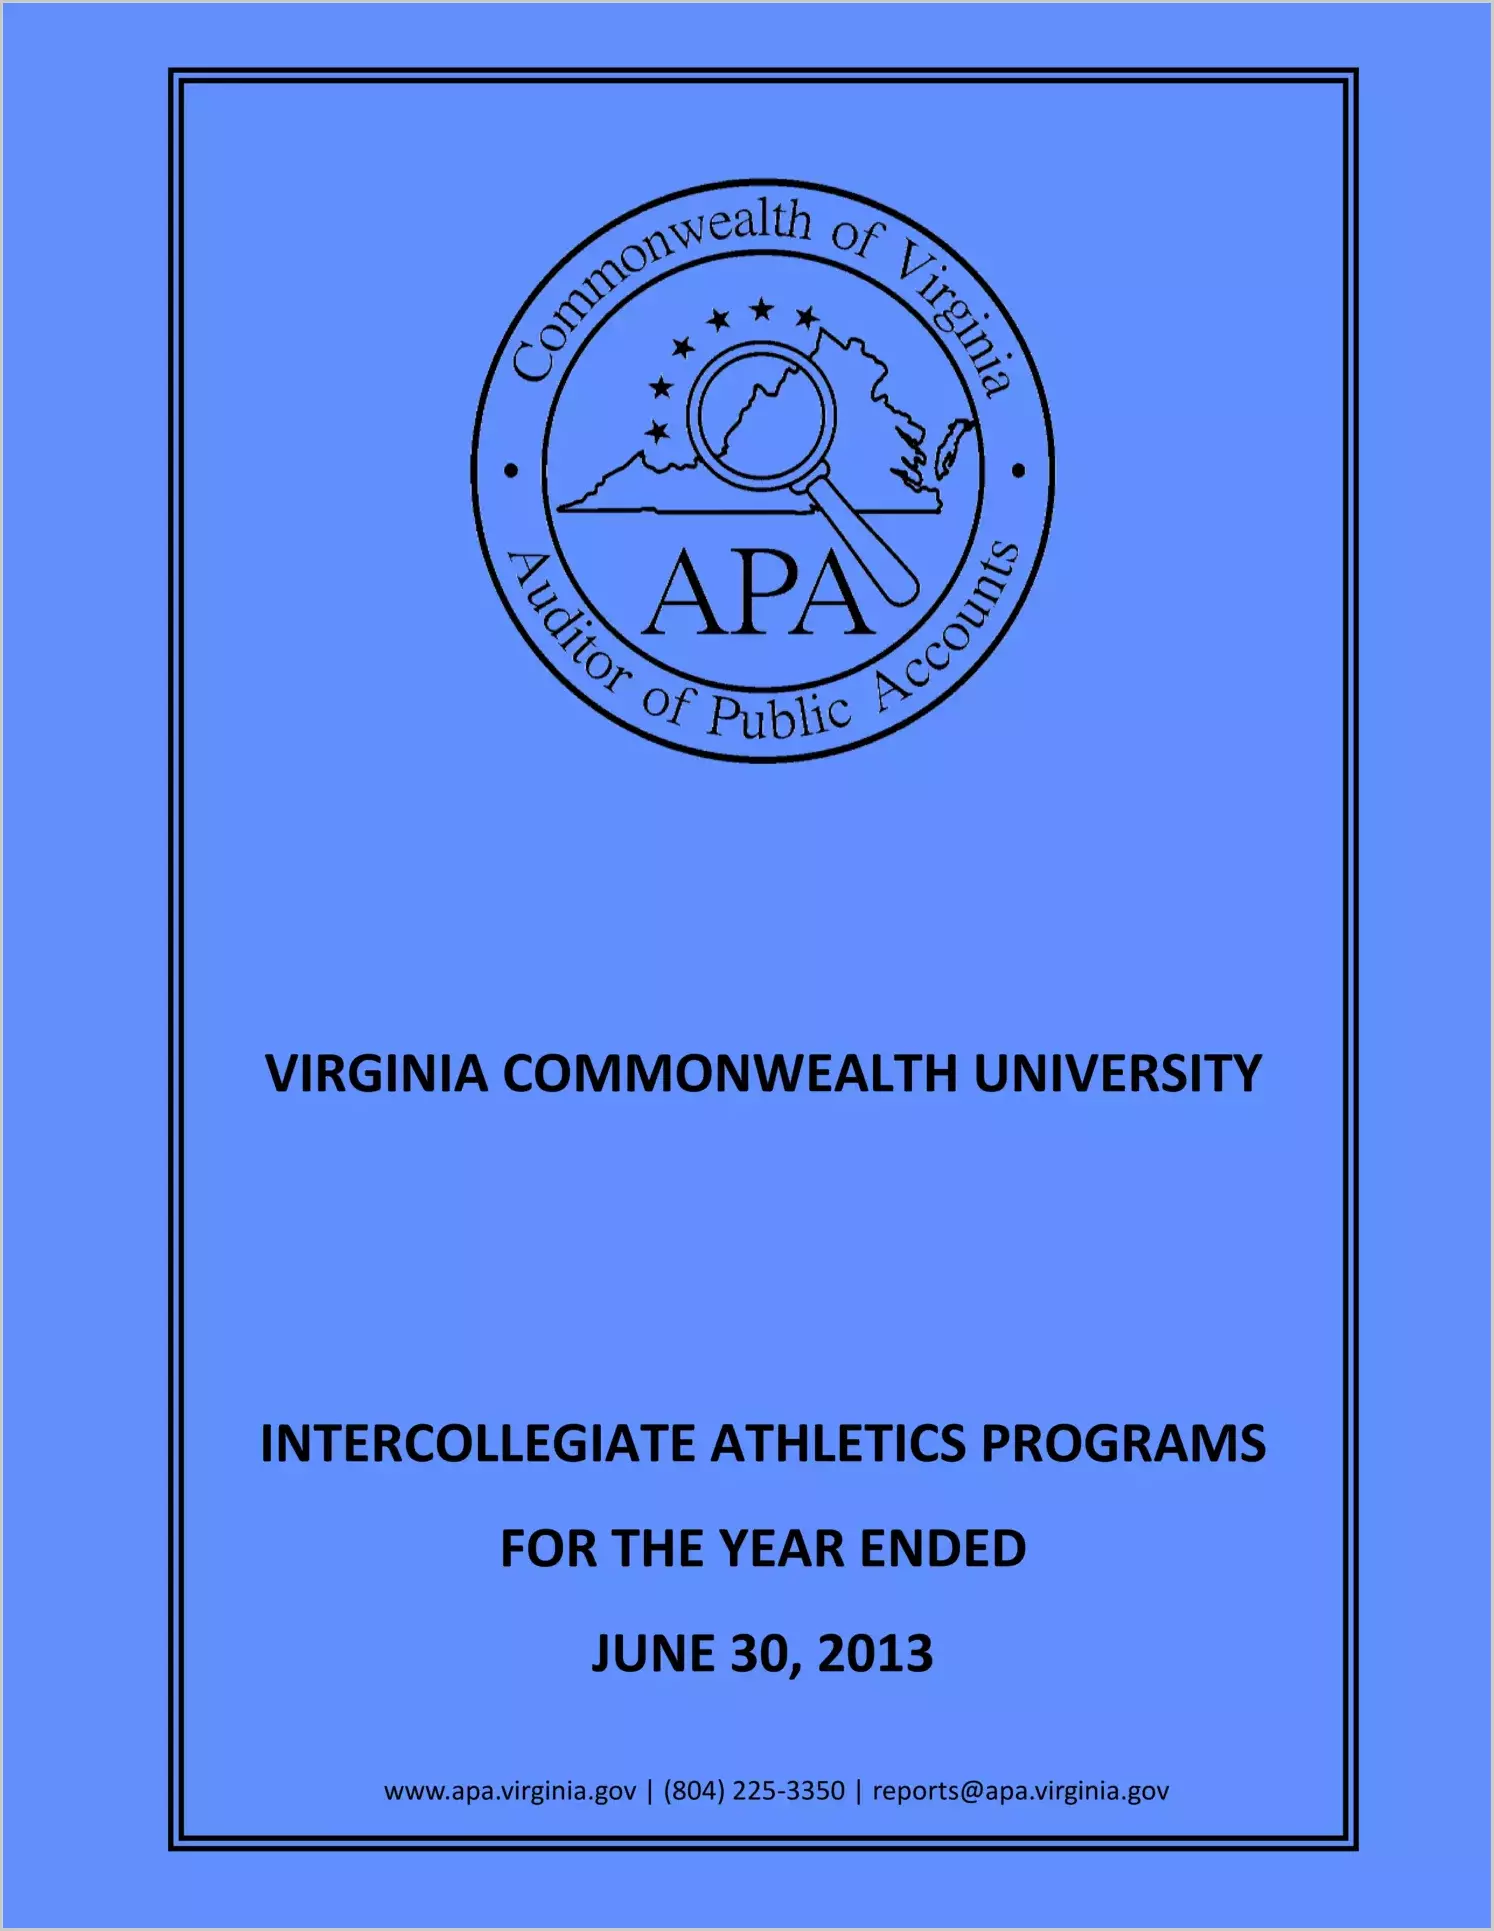 Virginia Commonwealth University Intercollegiate Athletics Programs for the year ended June 30, 2013